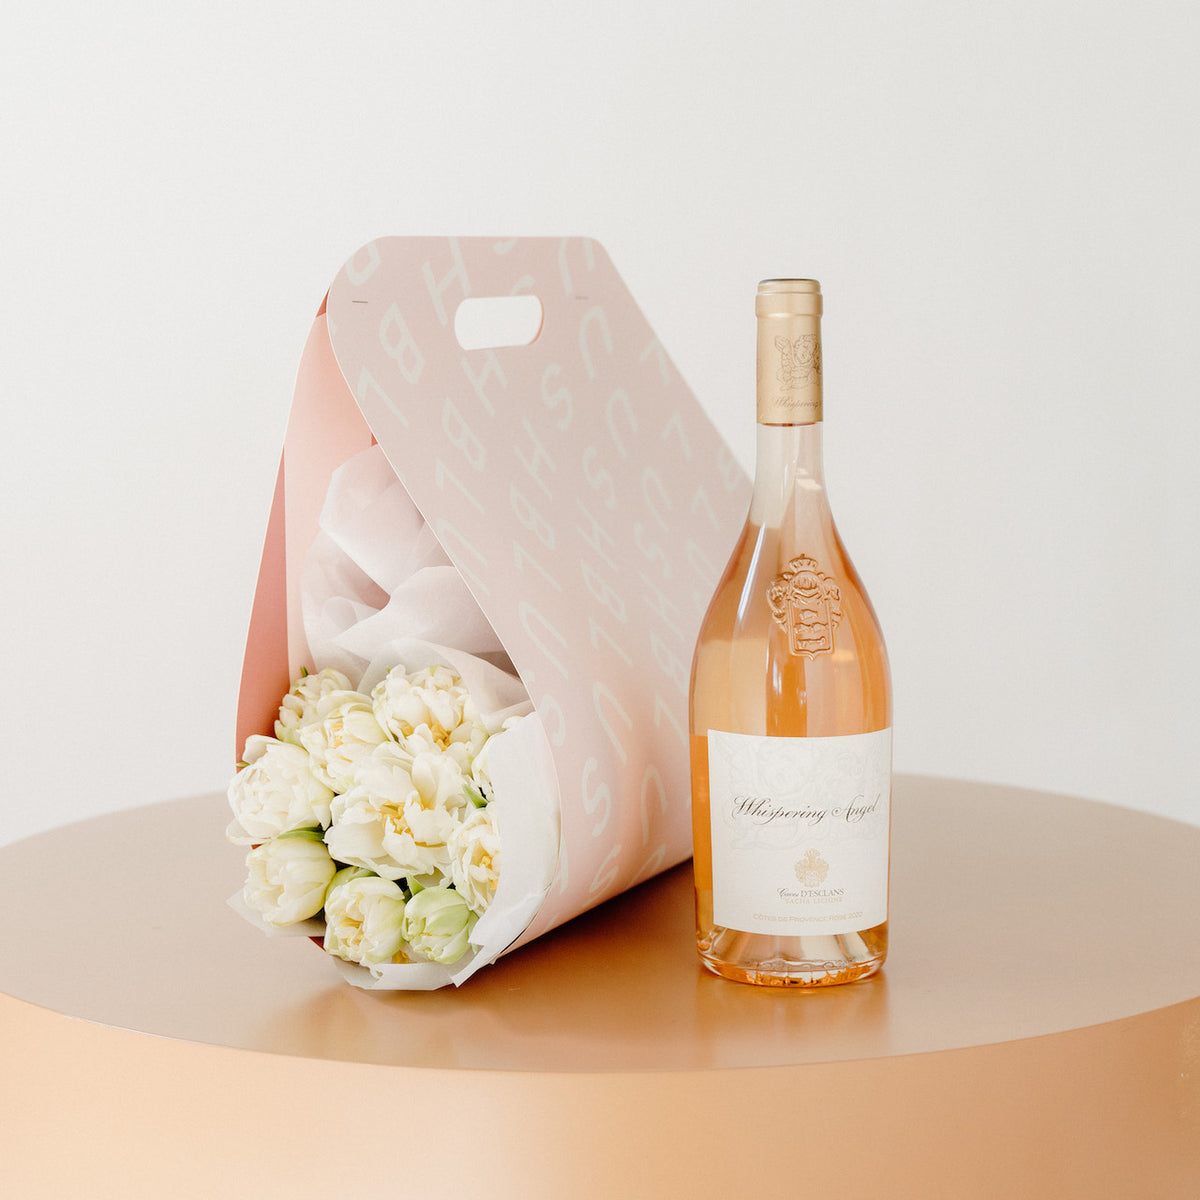 Seasonal Blooms Carrier + 'Whispering Angel' French Rosé 750ml